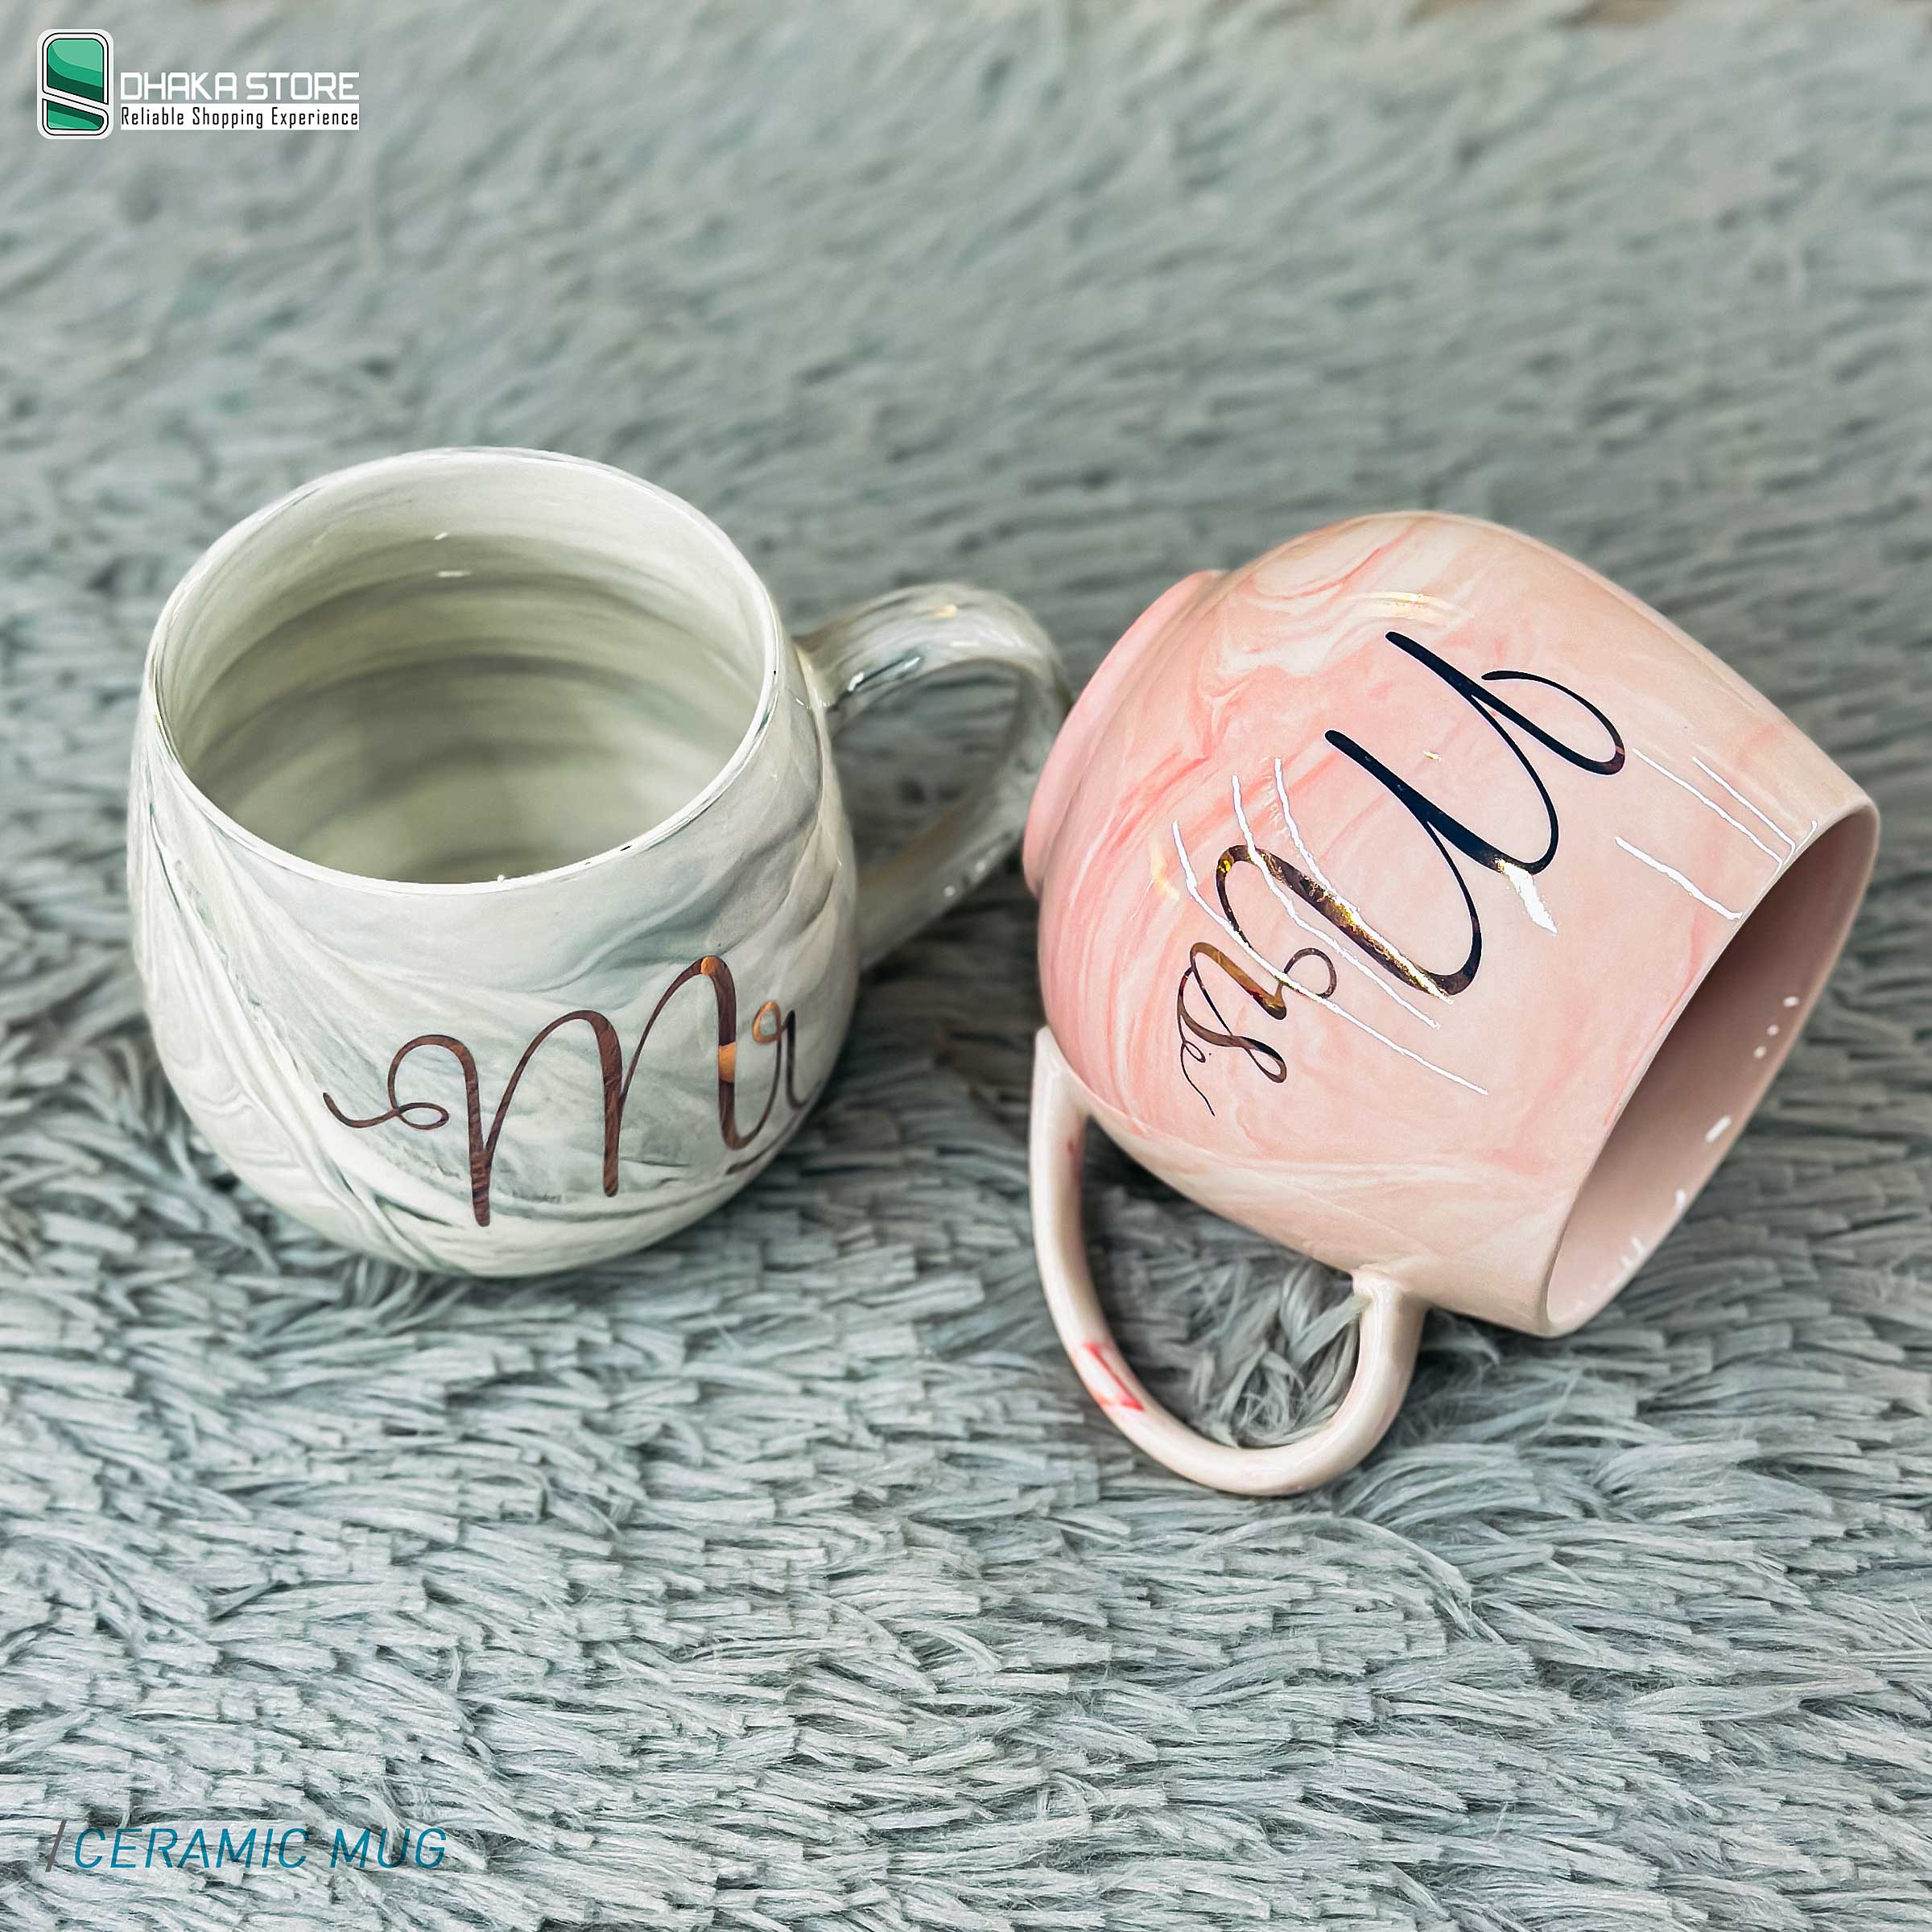 Ceramic Mug - Mr,Mrs Ceramic Coffe Cup, Marble Cup, Mr-Mrs Mug, Ceramicware, Ceramic Cup,Mug, Dhaka Store , Couple Mug